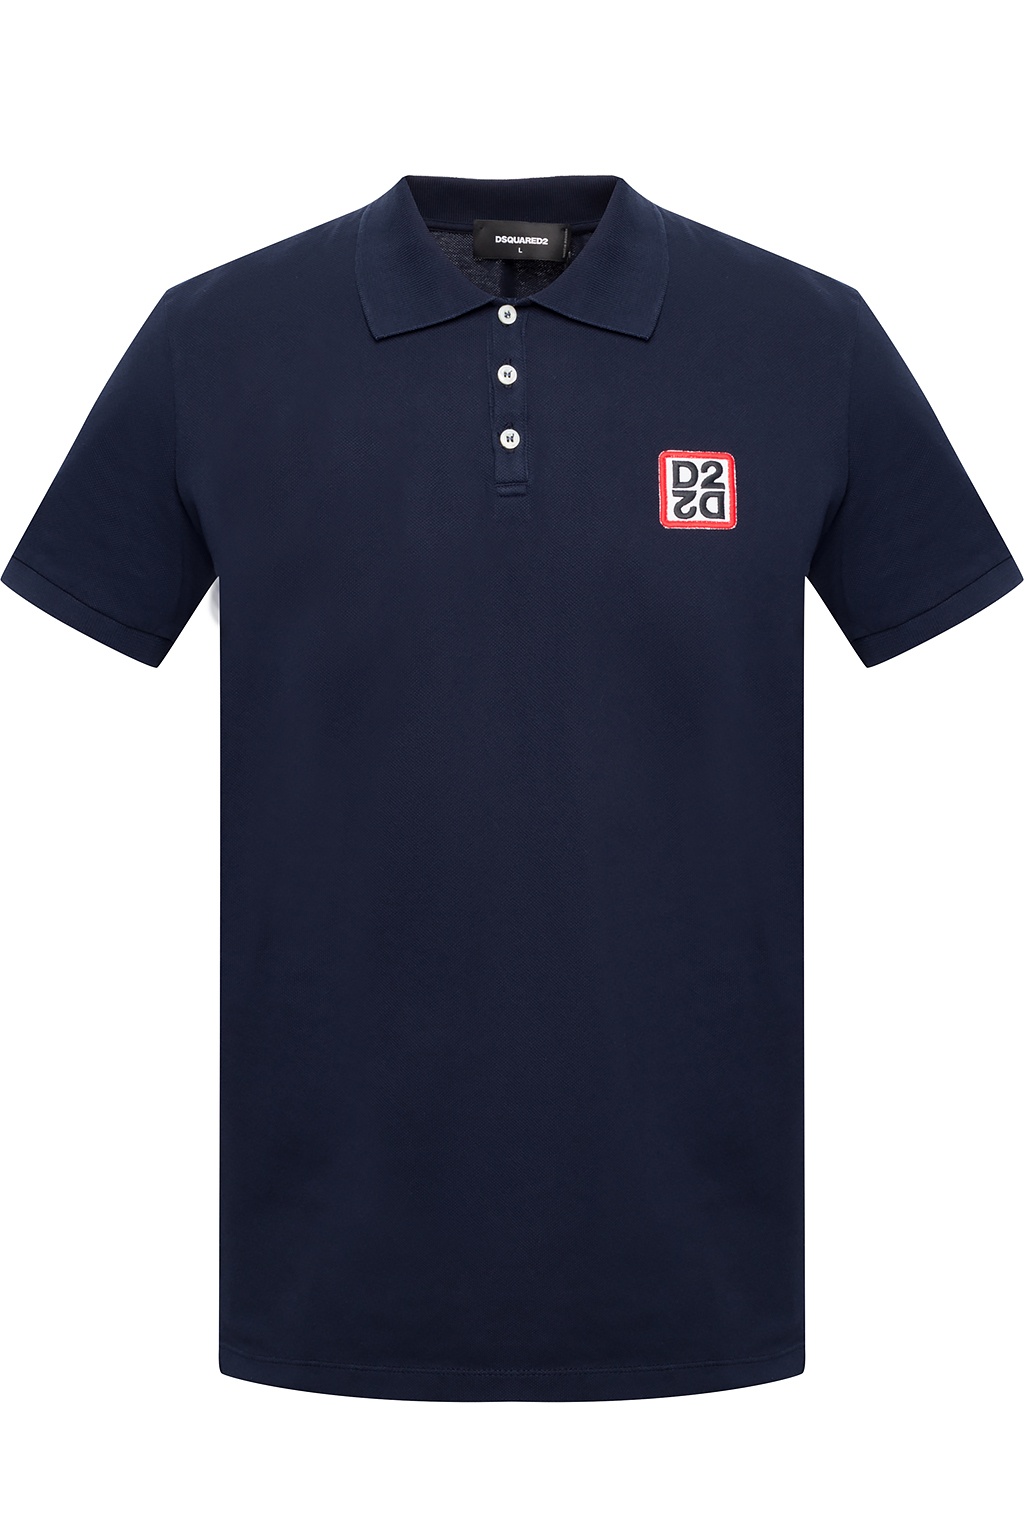 Polo shirt with logo Dsquared2 - Vitkac US